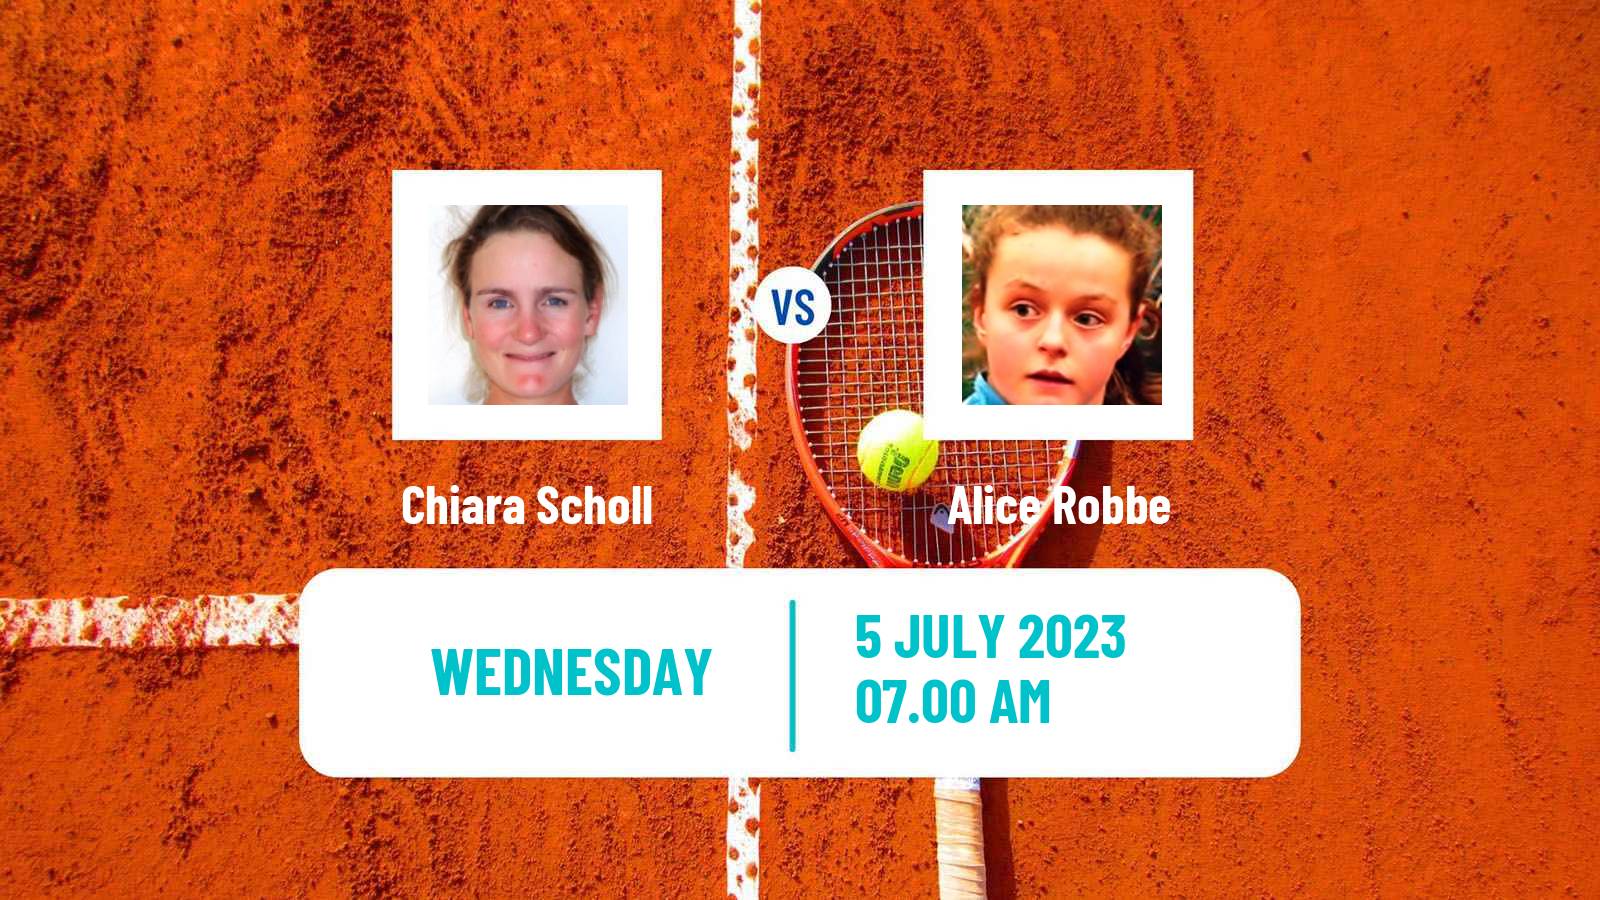 Tennis ITF W40 The Hague Women Chiara Scholl - Alice Robbe